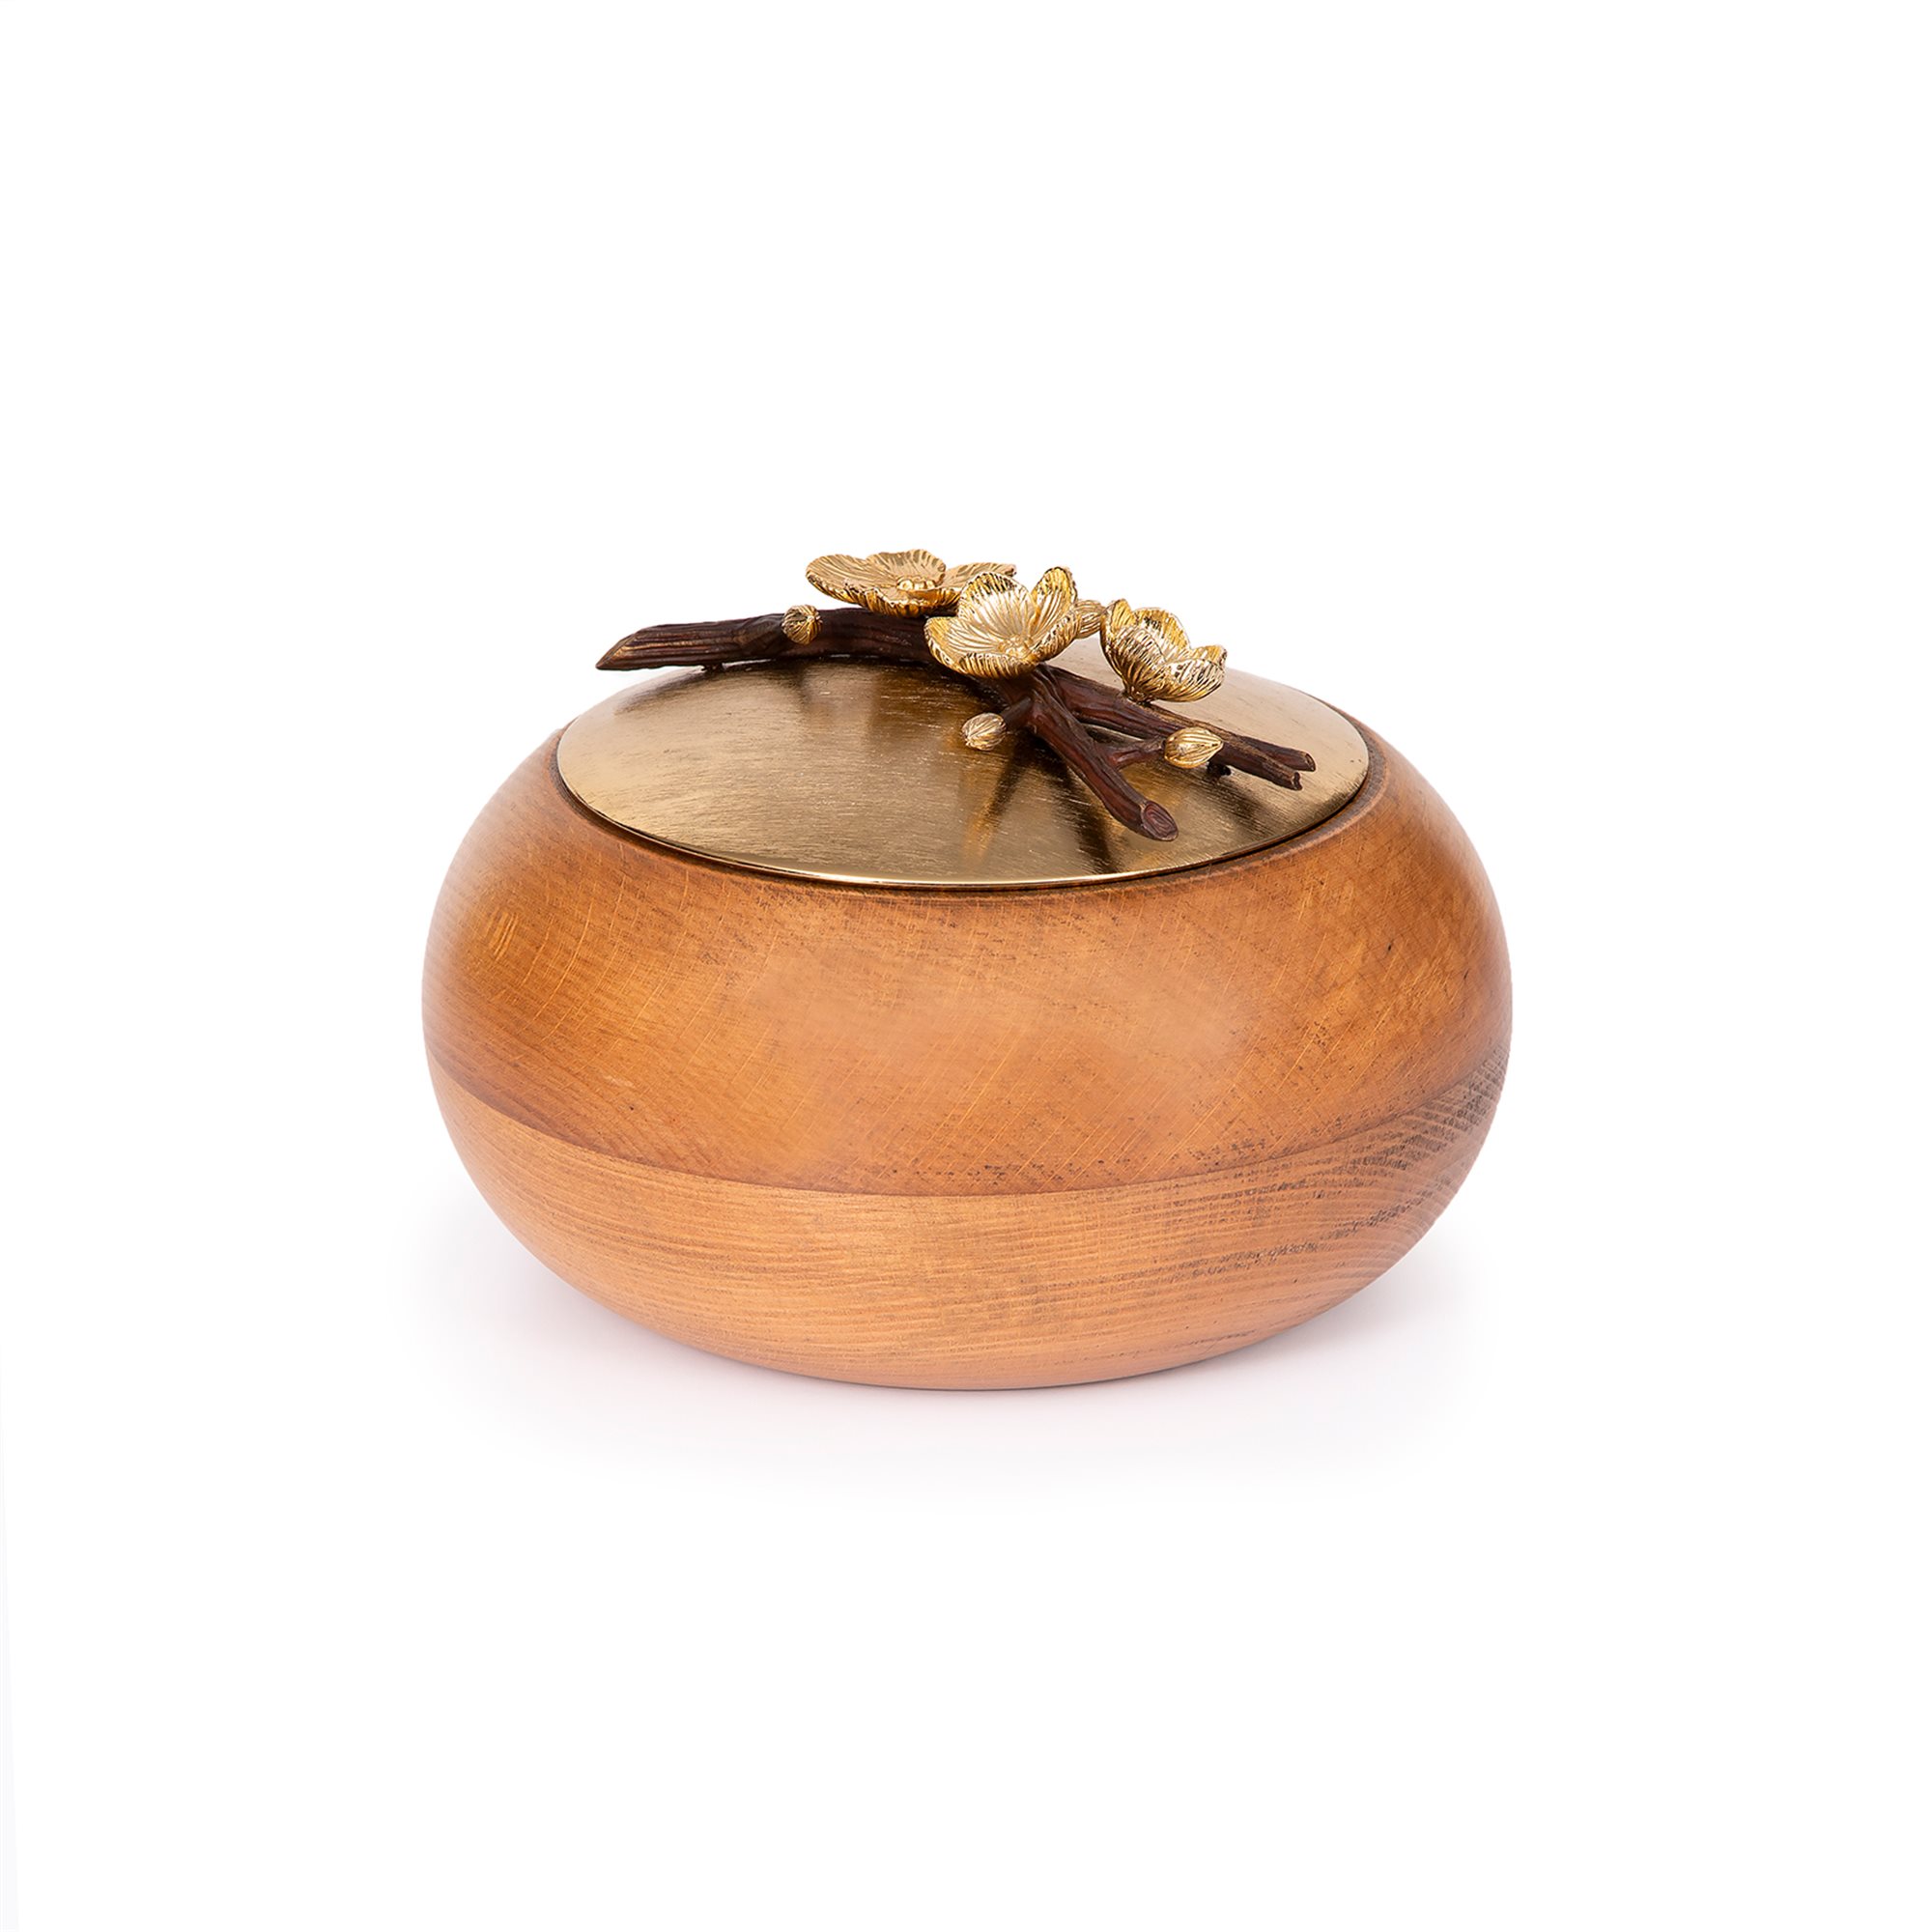 Marina Wood Bowl with Lid (Size C3)